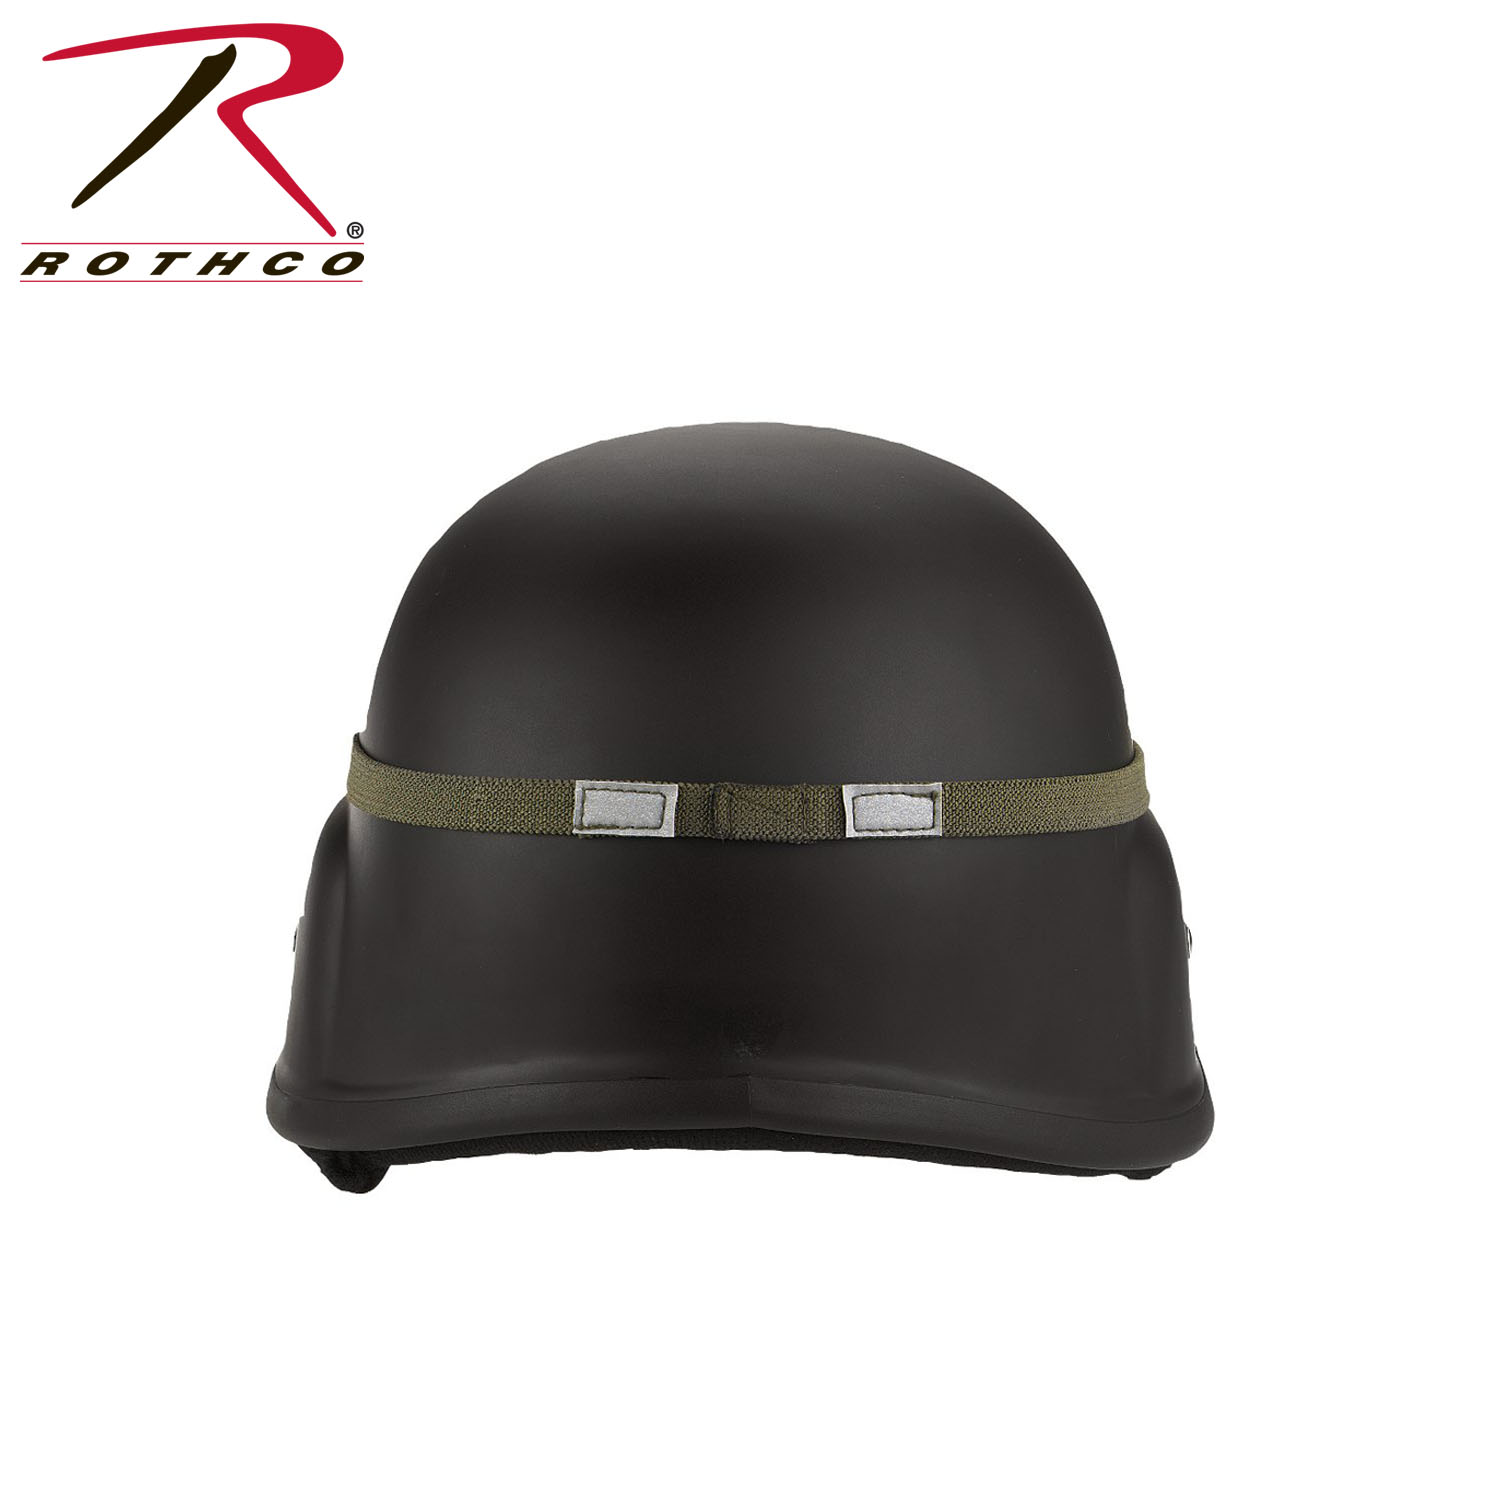 Lannister Helmet Accessories Hats & Caps Helmets Military Helmets 